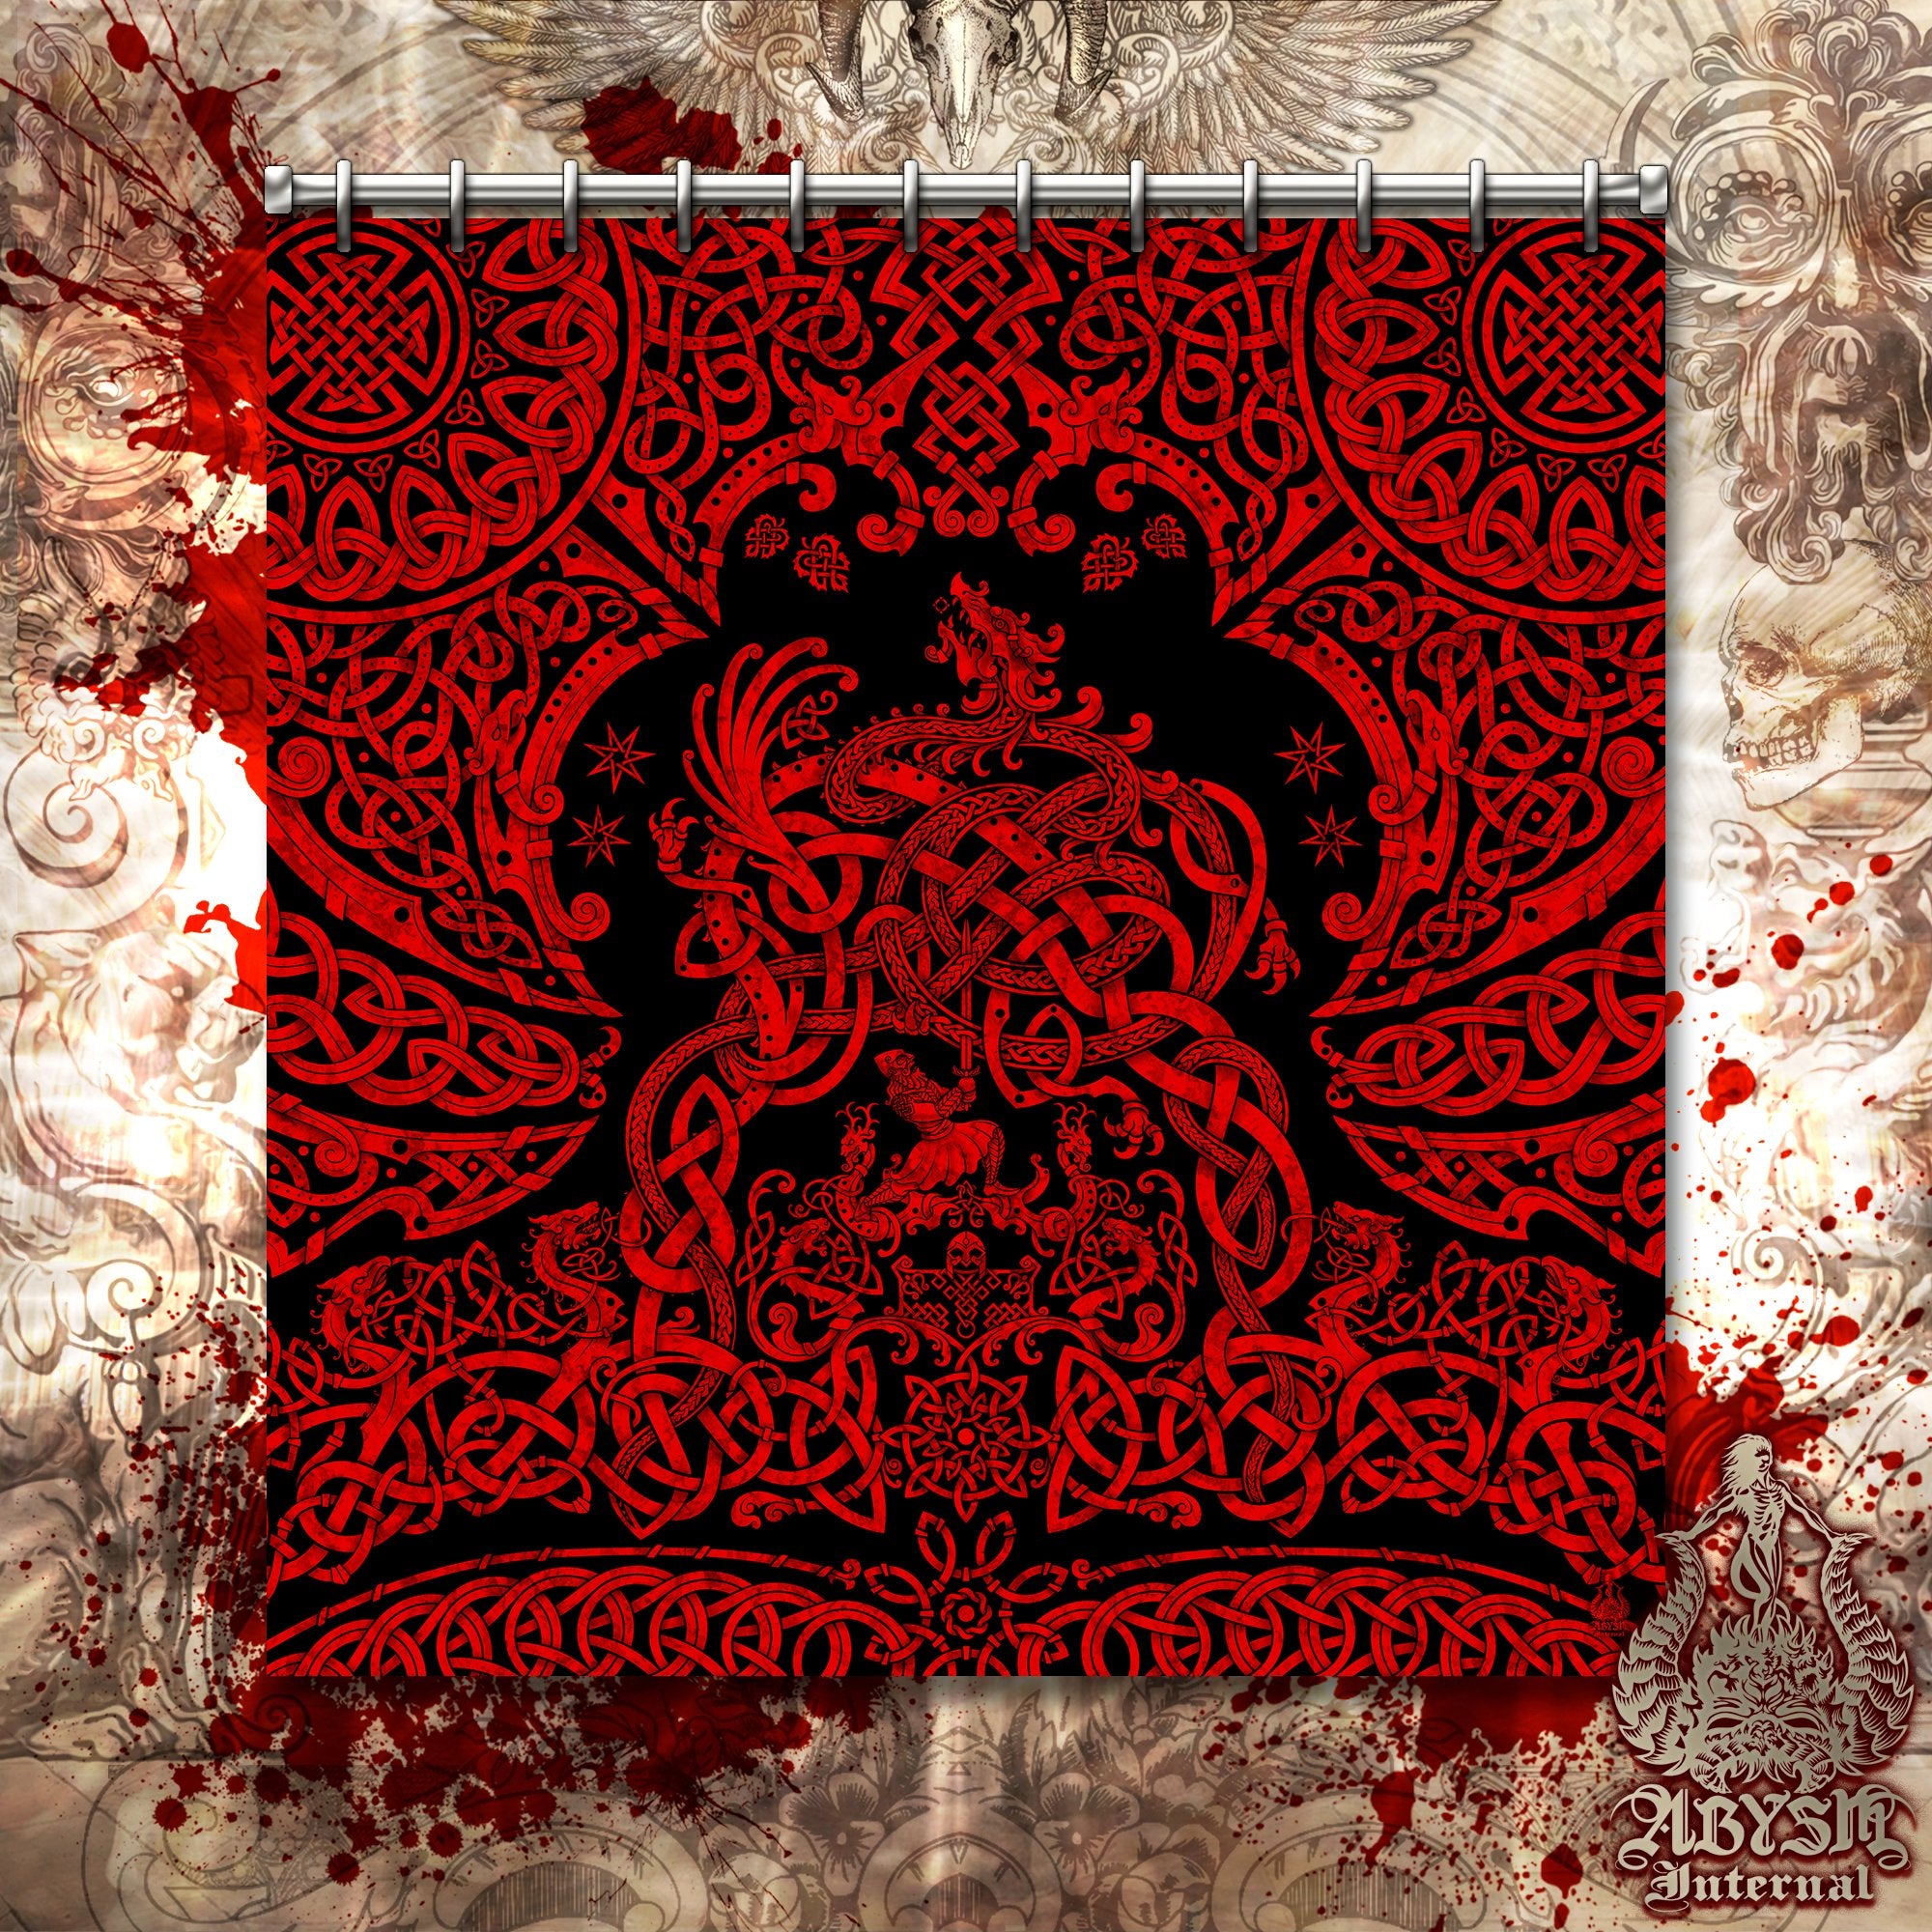 Red and Black Viking Shower Curtain, 71x74 inches, Norse Art Bathroom Decor, Nordic Dragon Fafnir - Abysm Internal